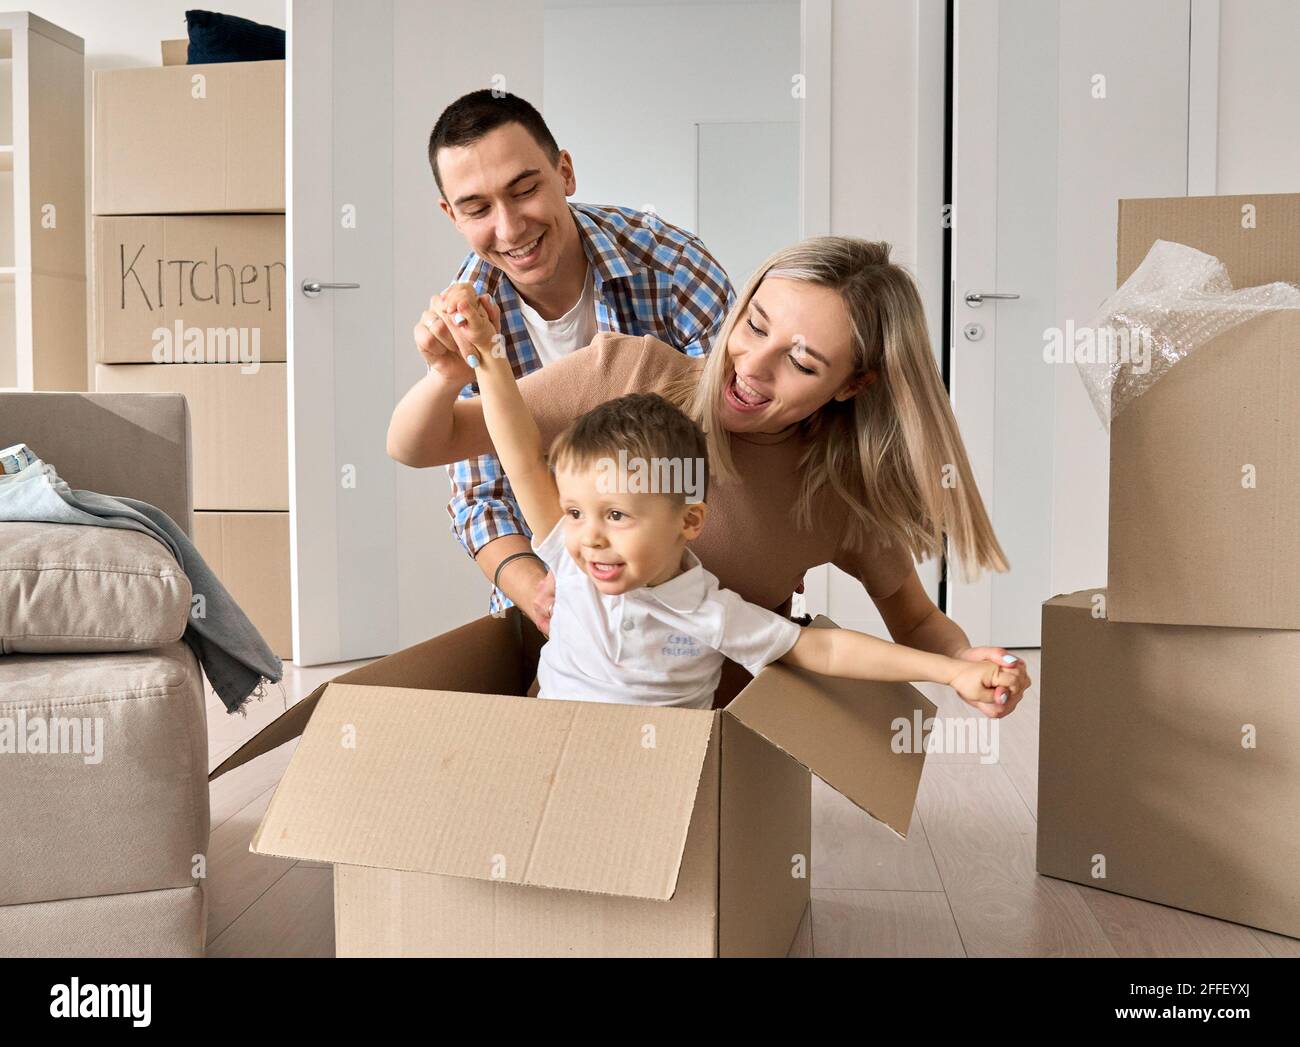 Happy joyful parents and kid ride carton box in new mortgage apartments. Stock Photo